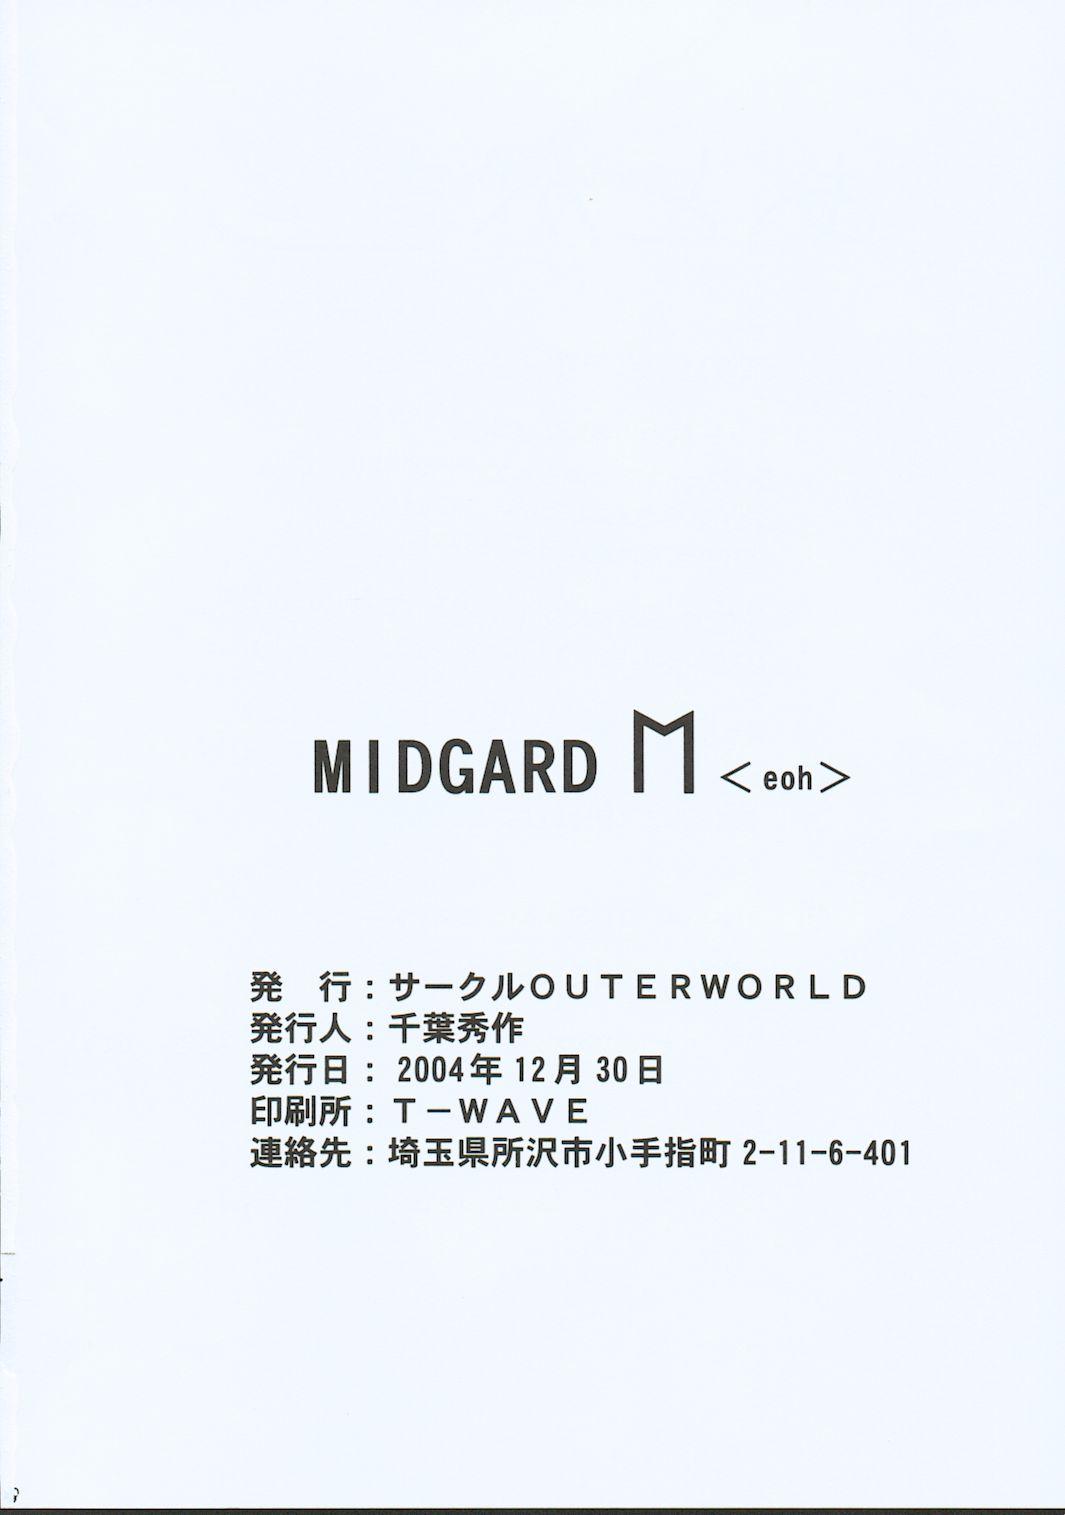 Midgard <eoh> 28